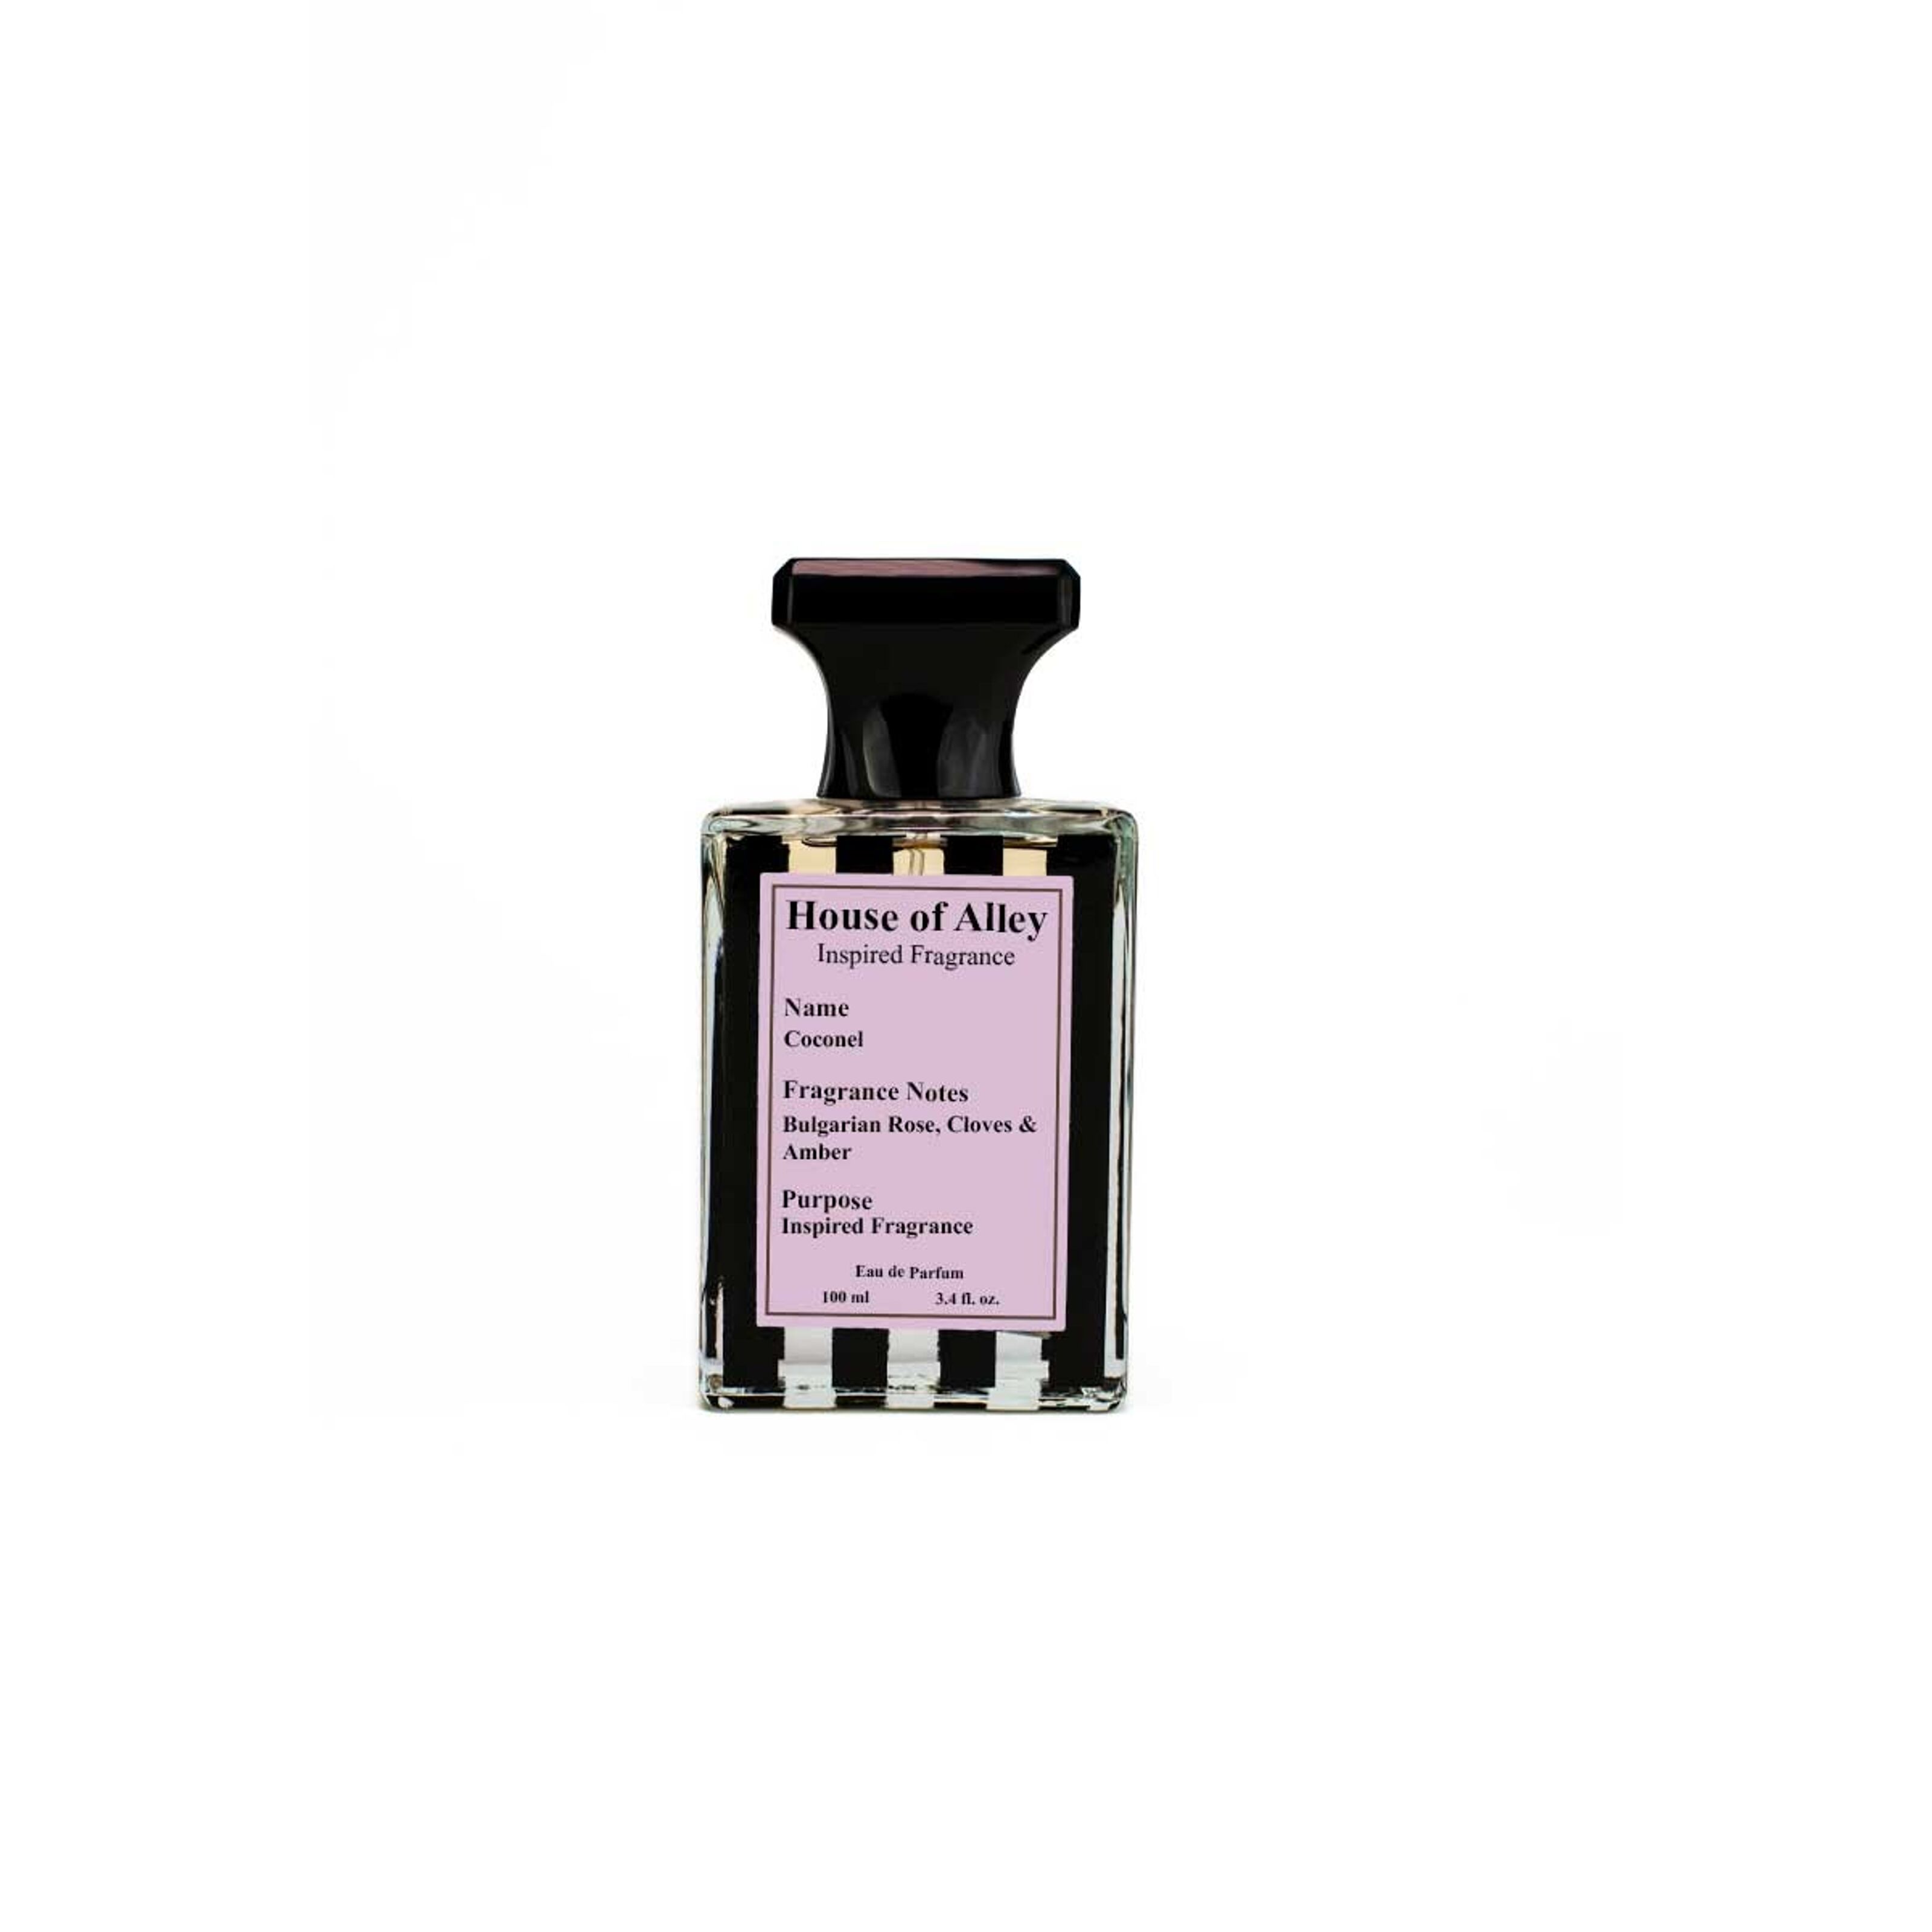 Pin by Hadeel on perfume  Clean skincare, Coco chanel mademoiselle, Perfume